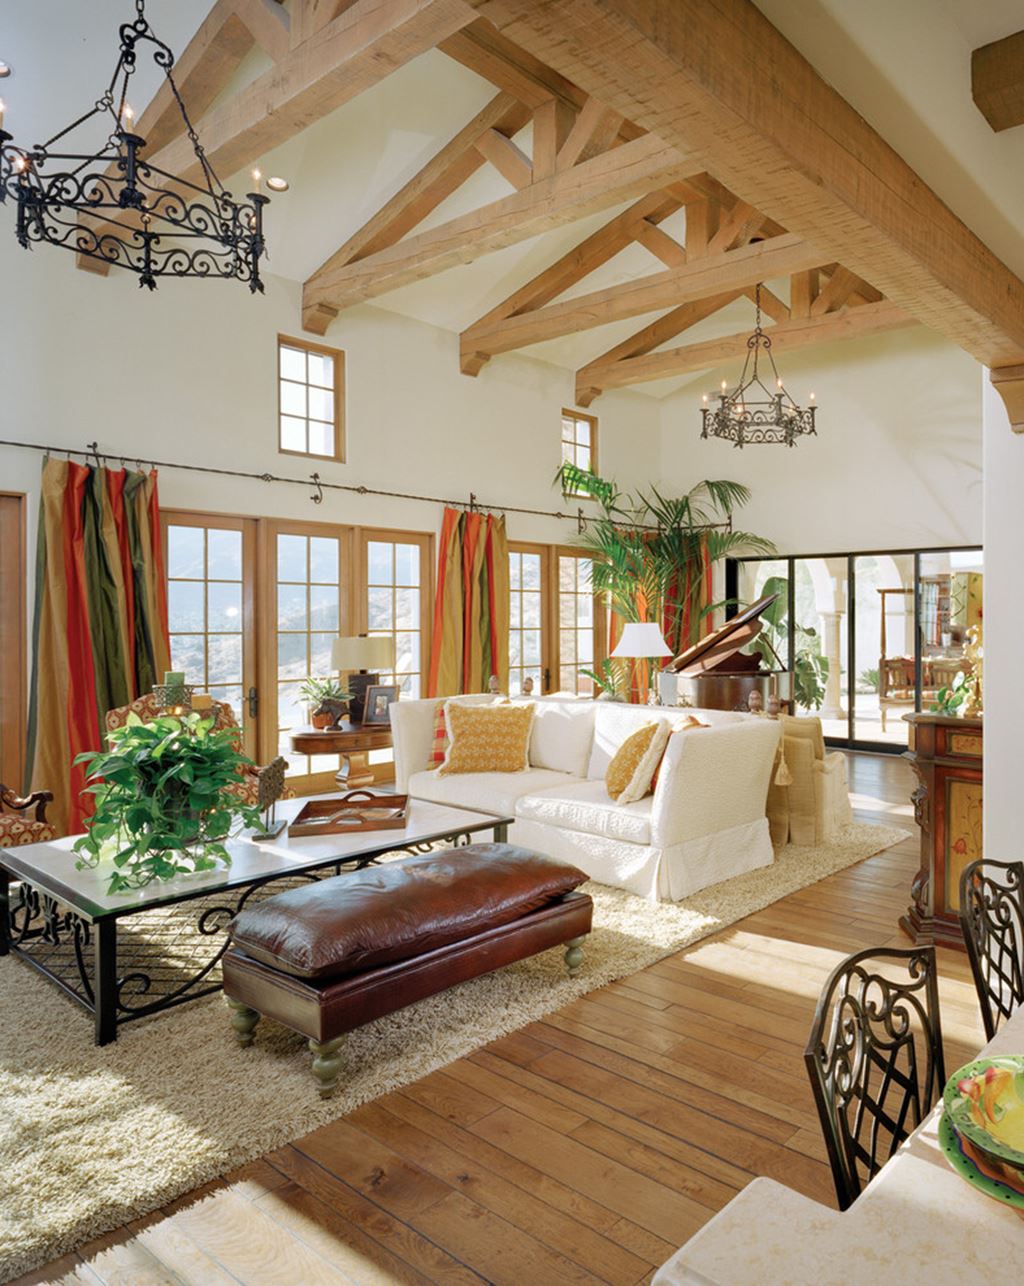 MediterraneanStyle living room design ideas